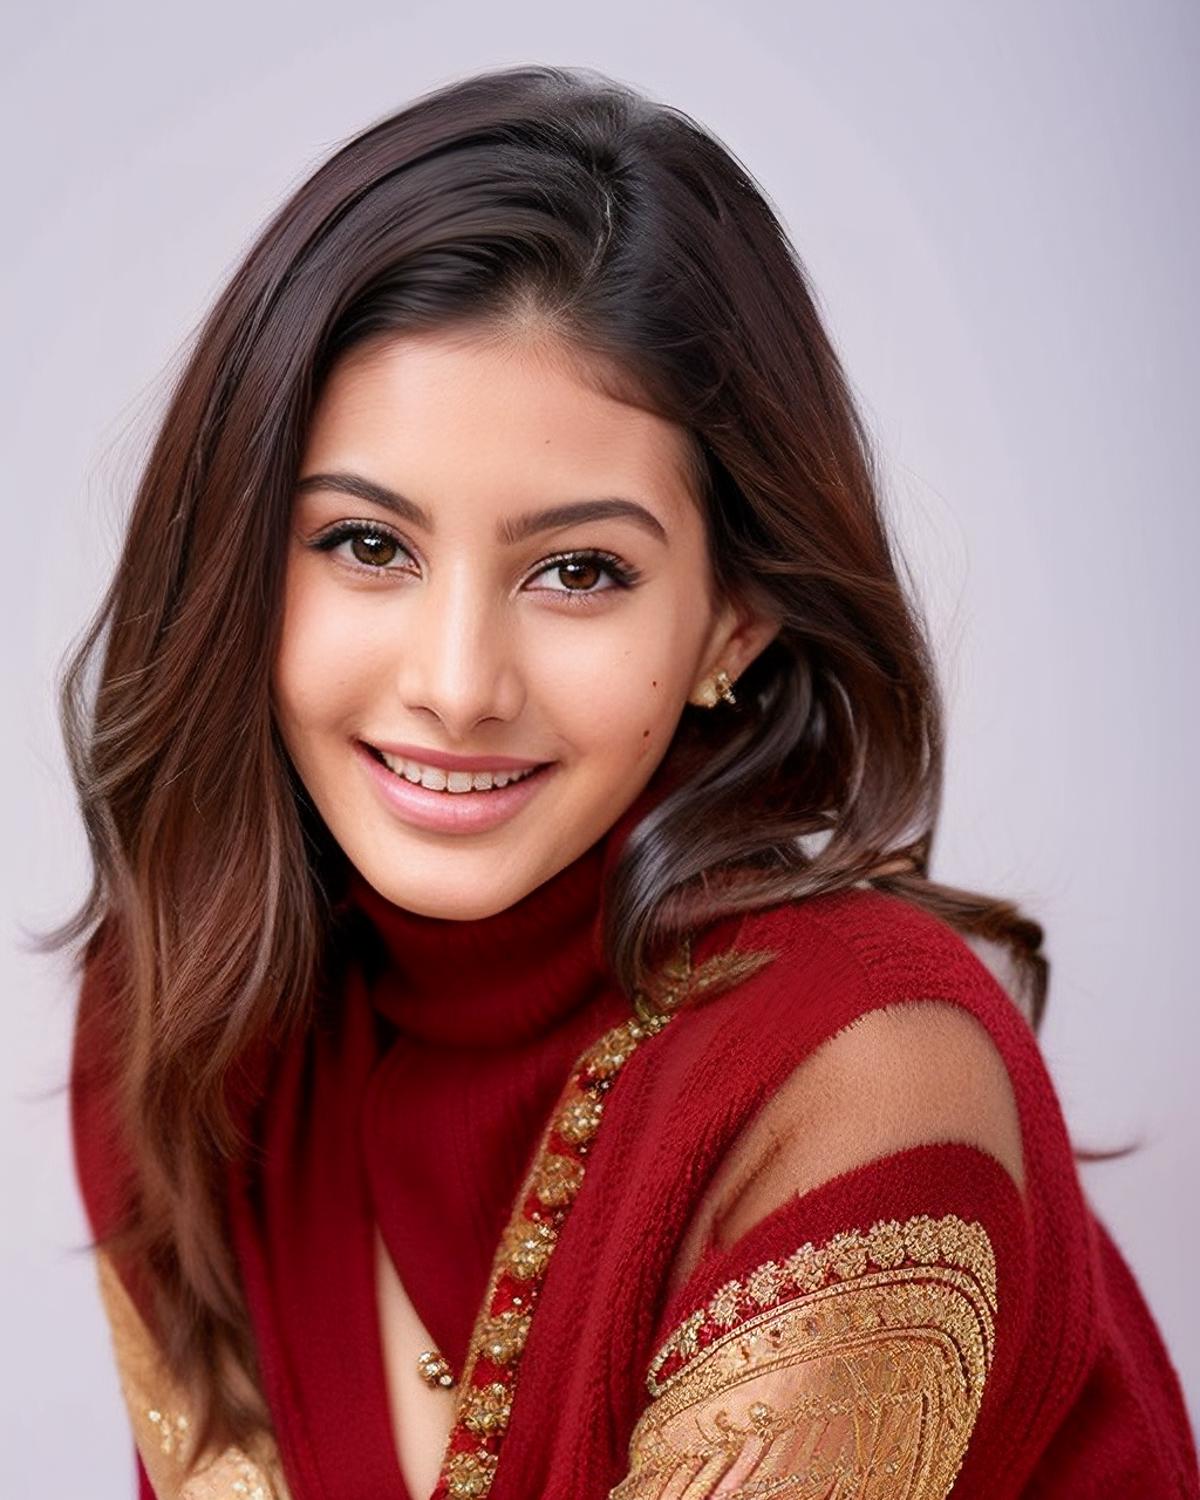 Amyra Dastur - Indian Actress/ Model (SD1.5) image by Desi_Cafe